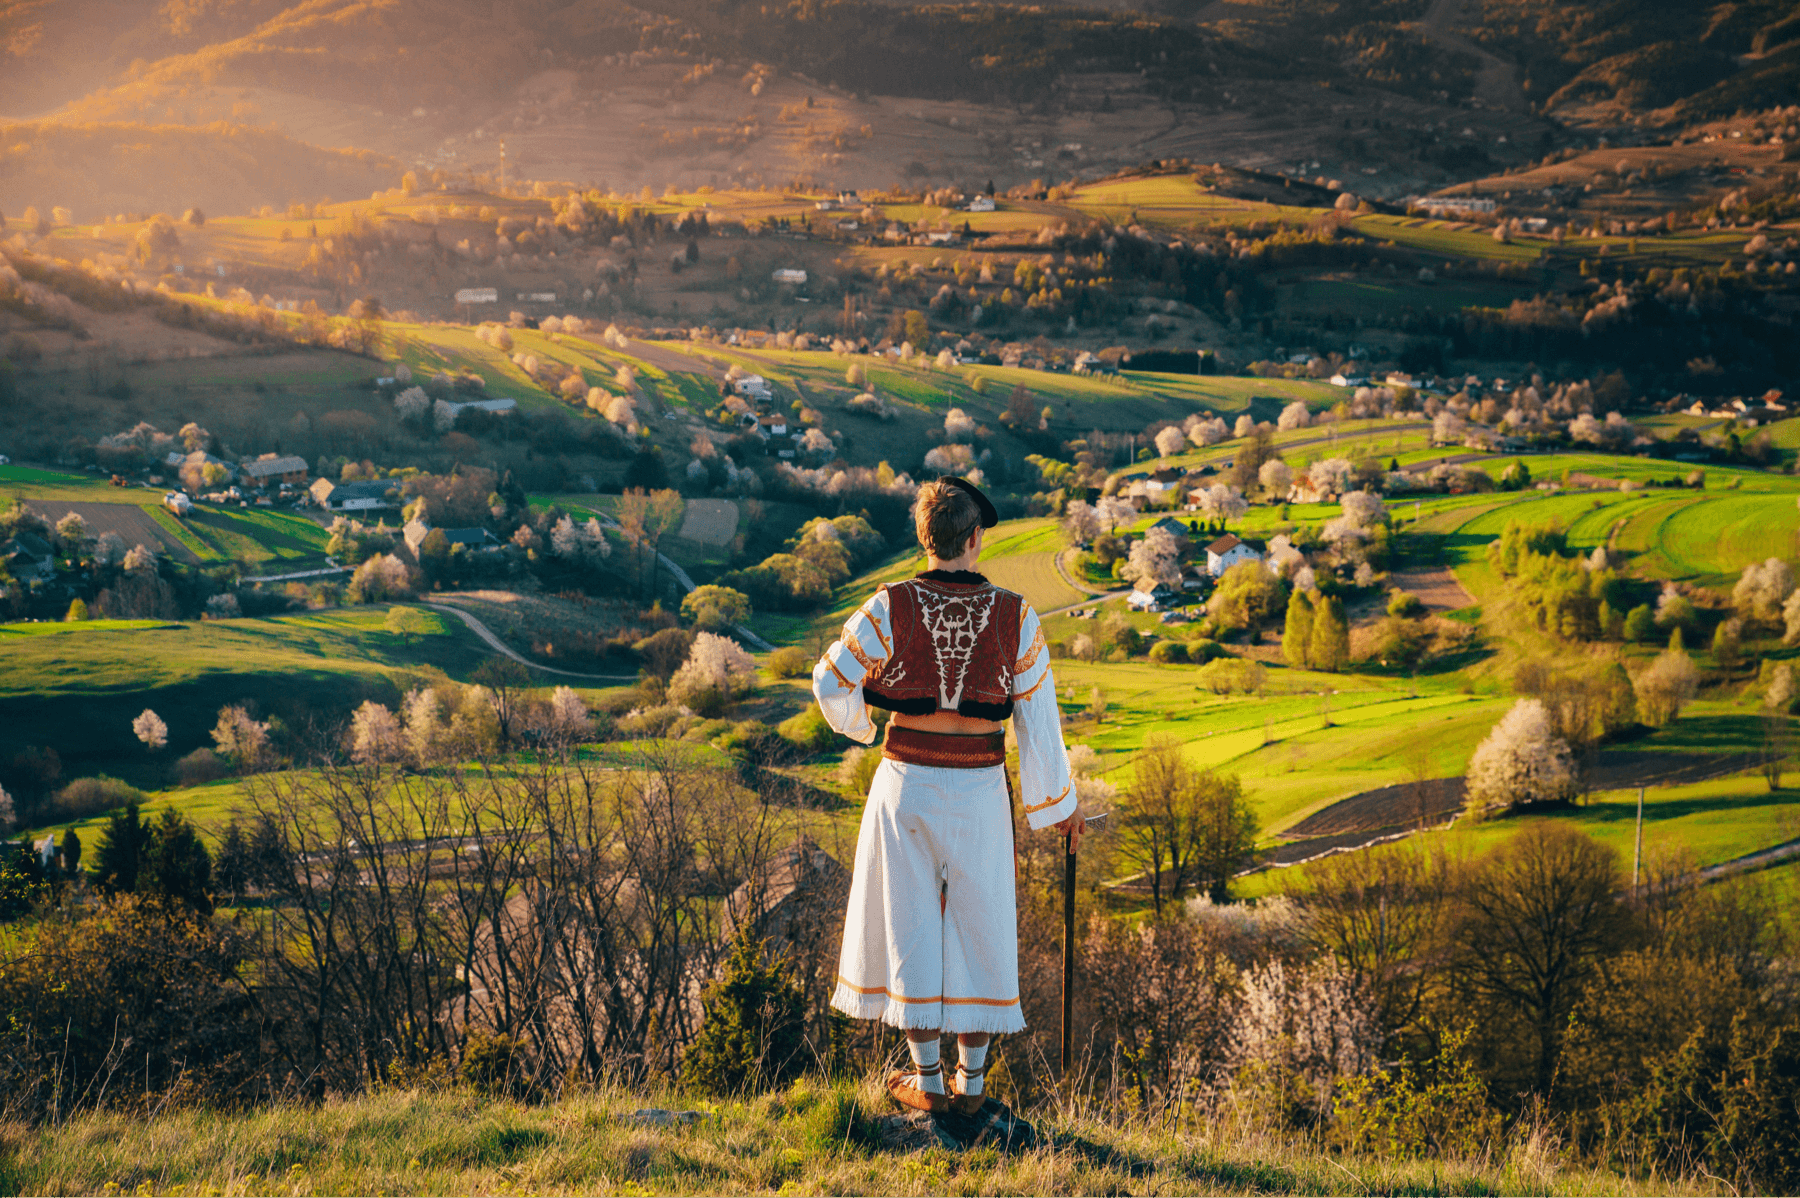 Slovak man in traditional dress overlooking hills